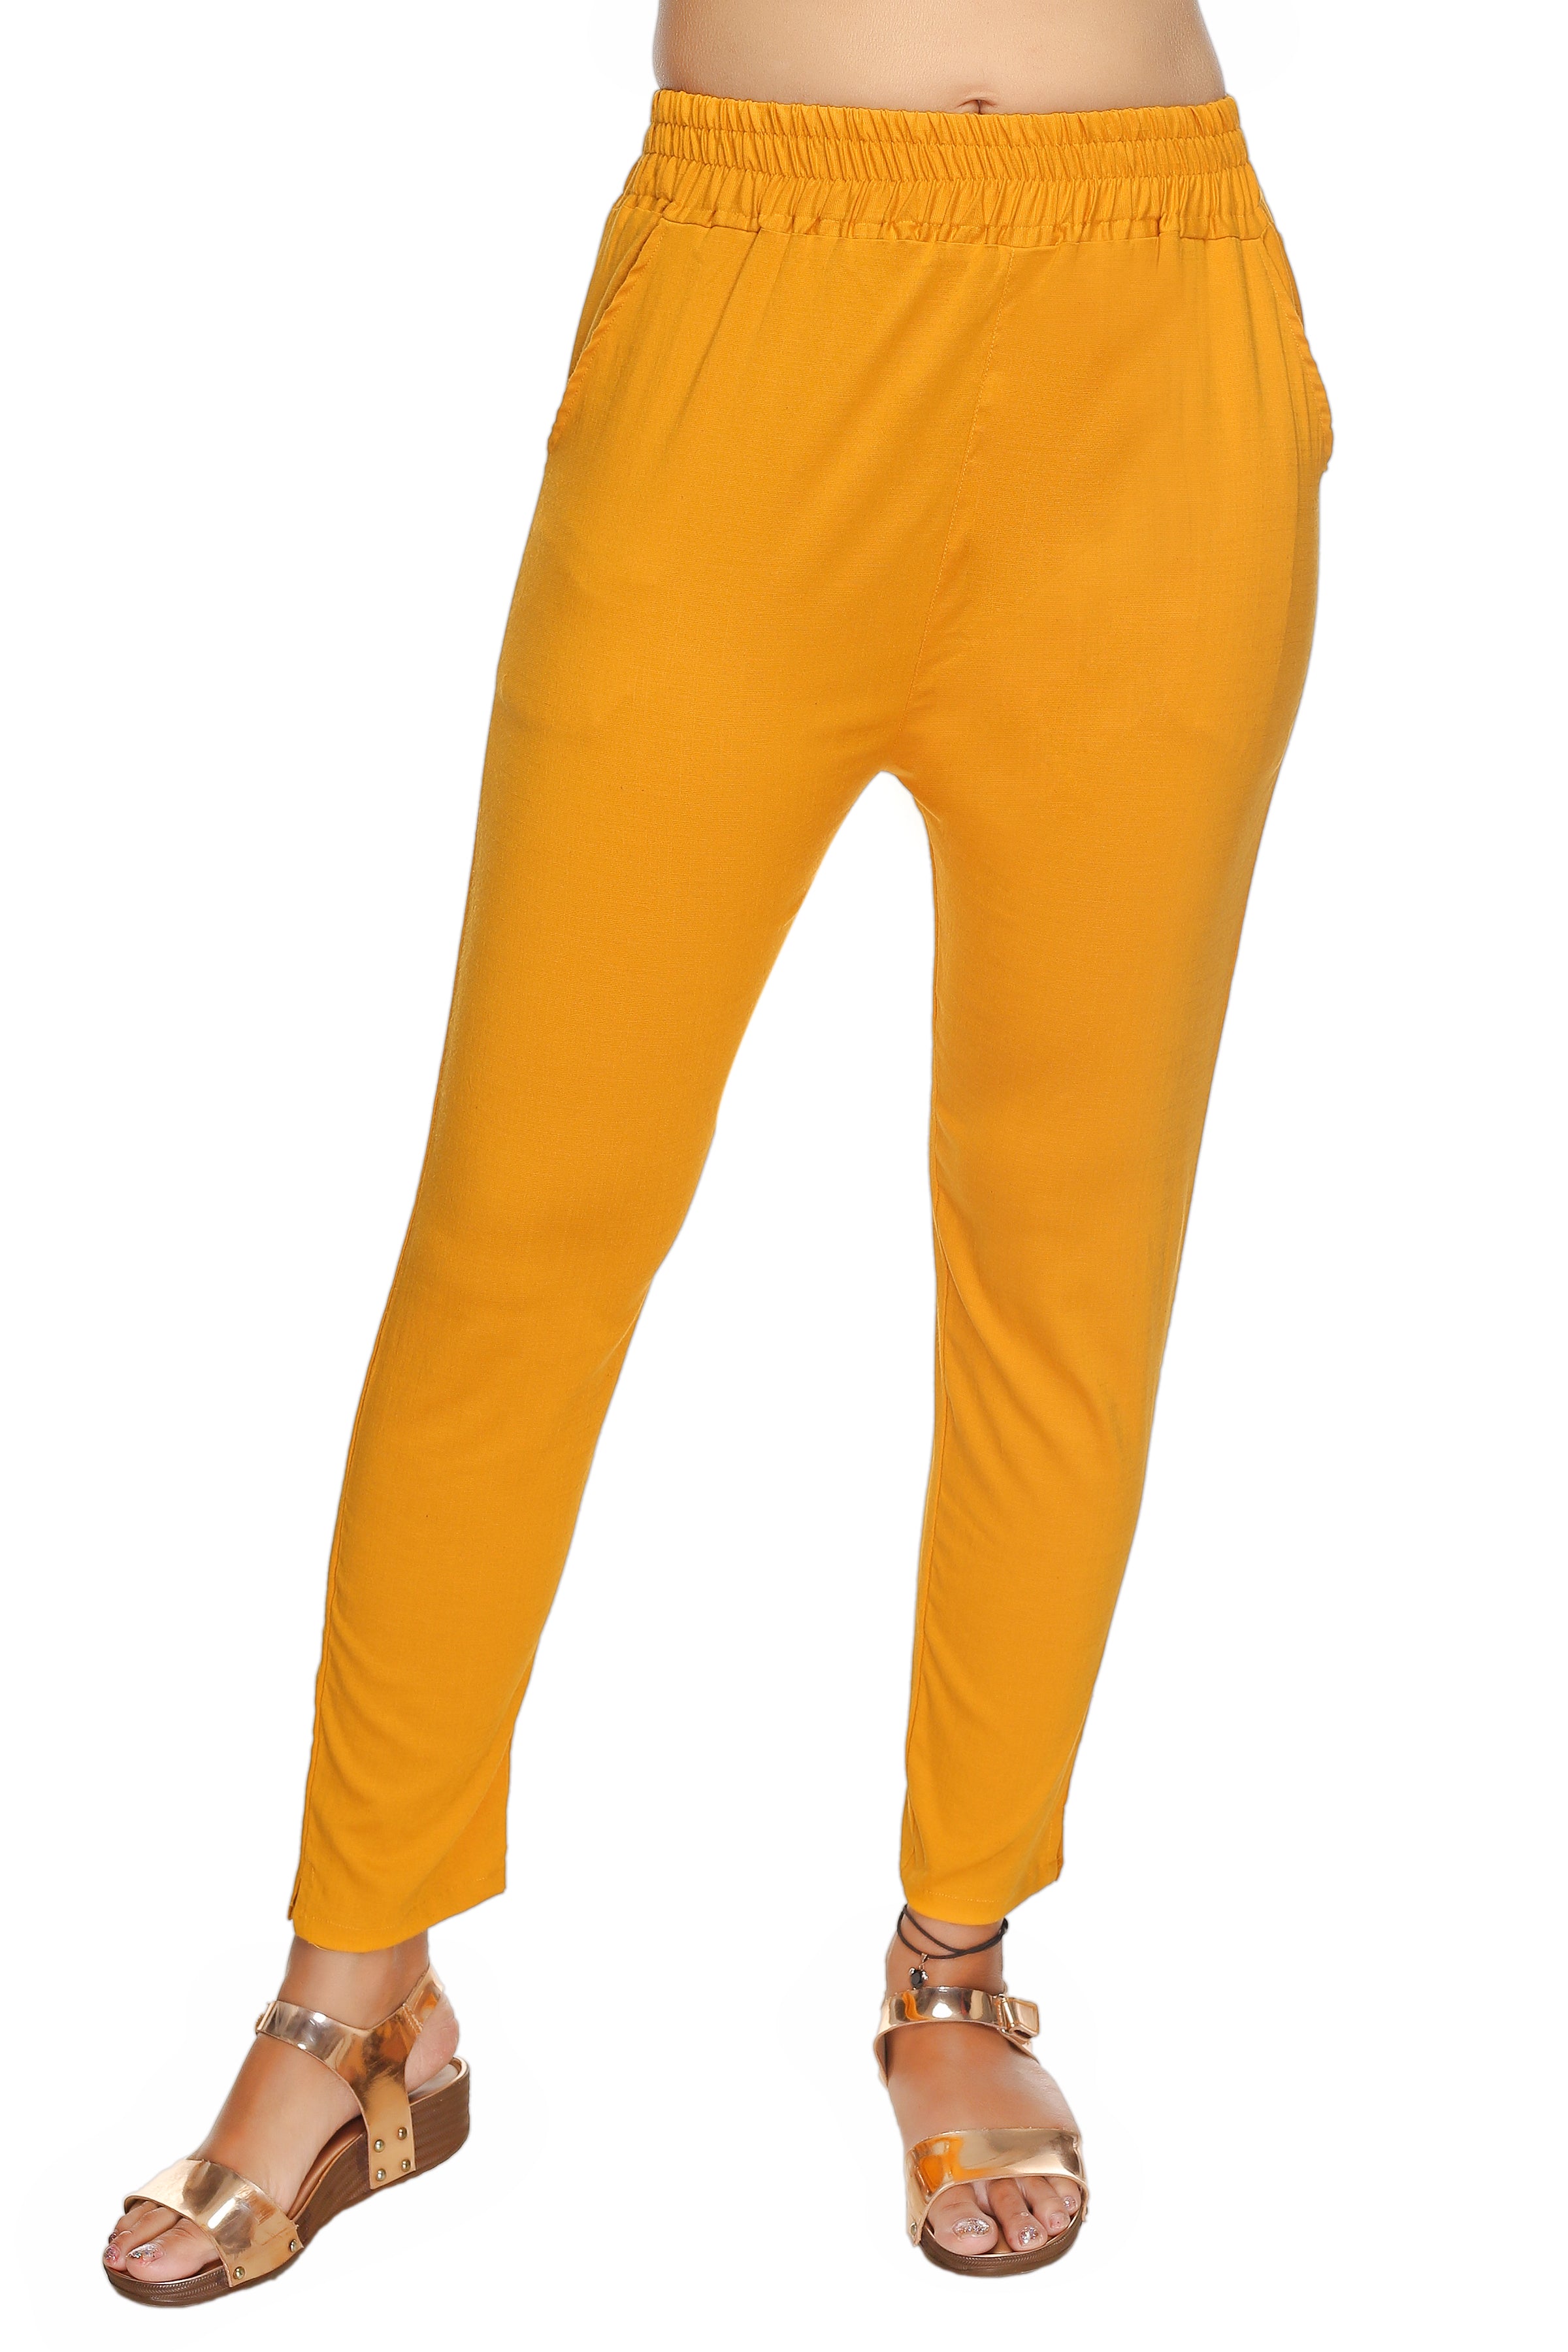 EPILOG Regular Fit Women Gold Trousers - Buy EPILOG Regular Fit Women Gold  Trousers Online at Best Prices in India | Flipkart.com